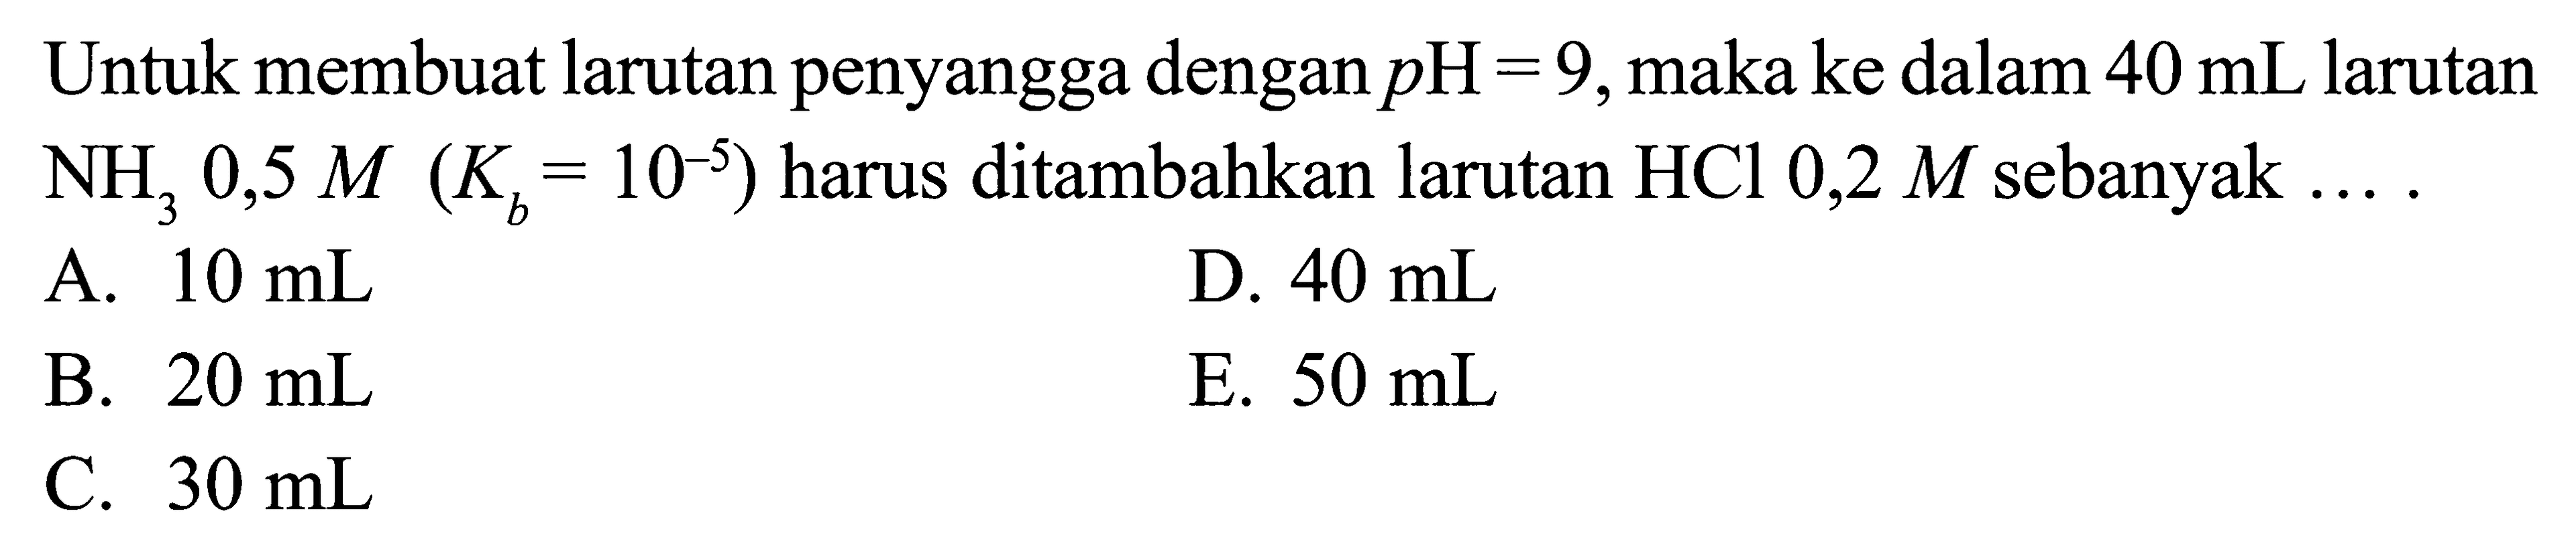 Untuk membuat larutan penyangga dengan  pH=9 , maka ke dalam  40 mL  larutan  NH3 0,5 M Kb=10^(-5)  harus ditambahkan larutan  HCl 0,2 M  sebanyak  .... 